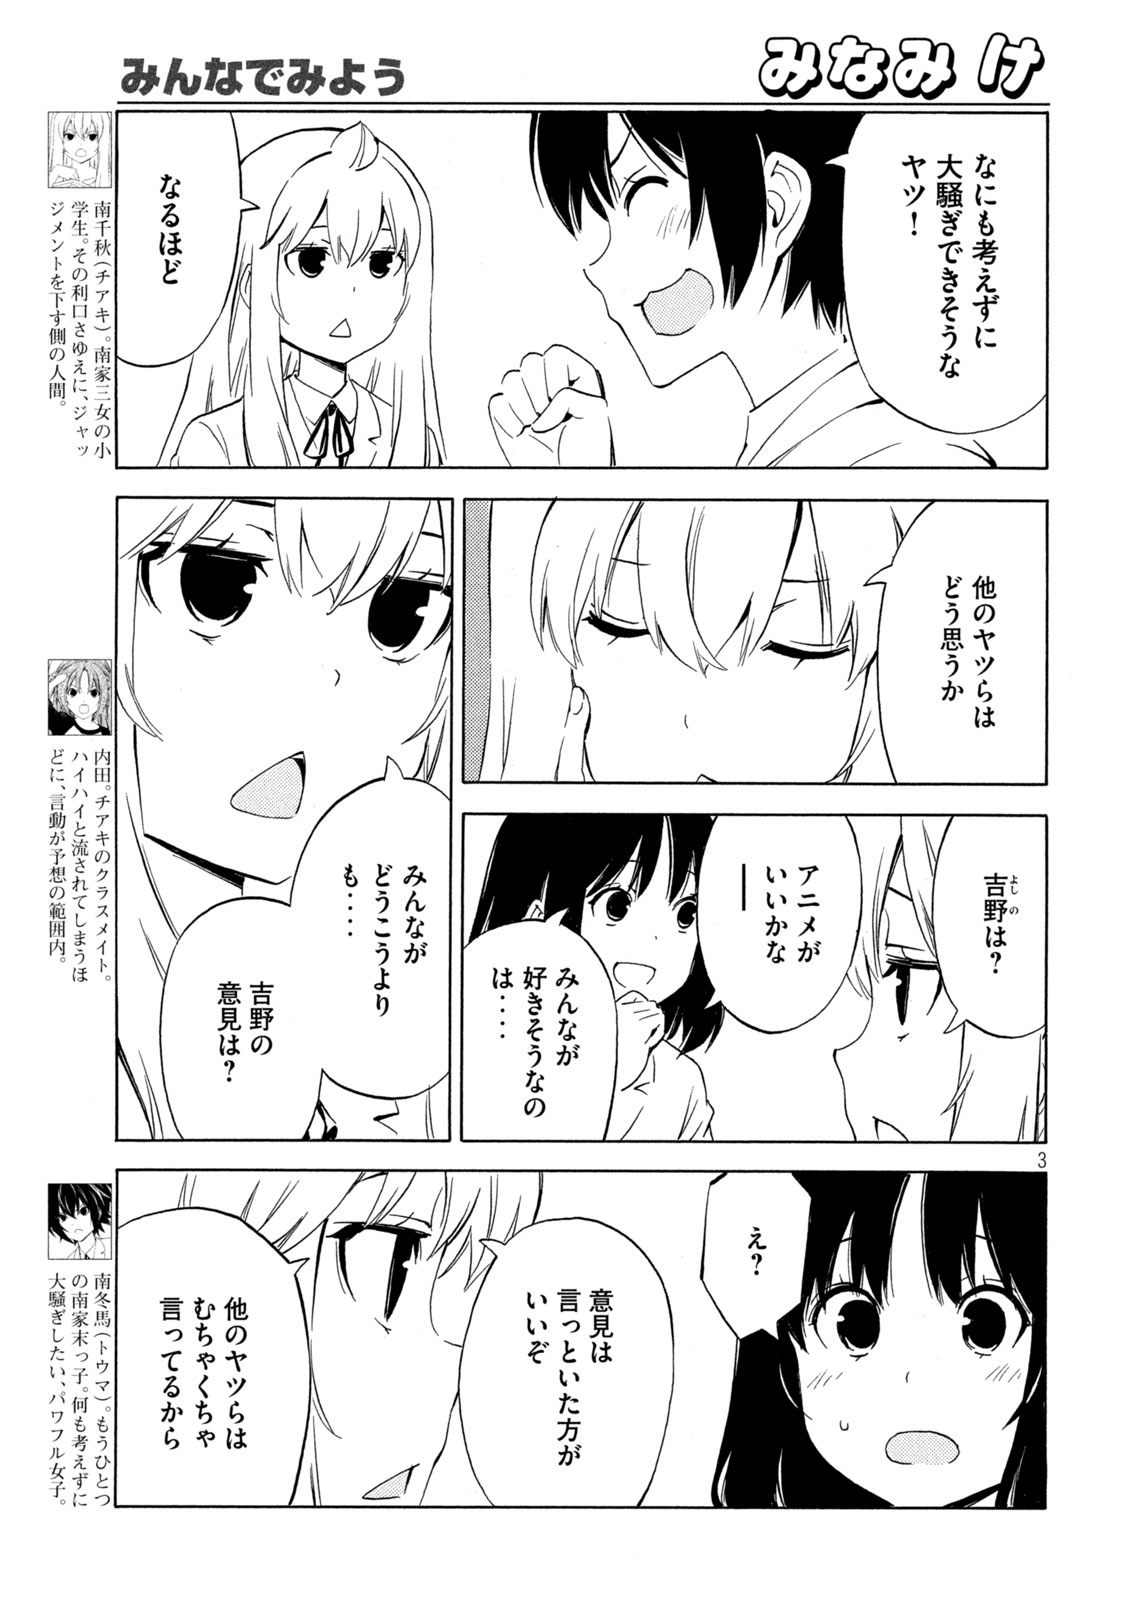 Minami-ke - Chapter 479 - Page 3